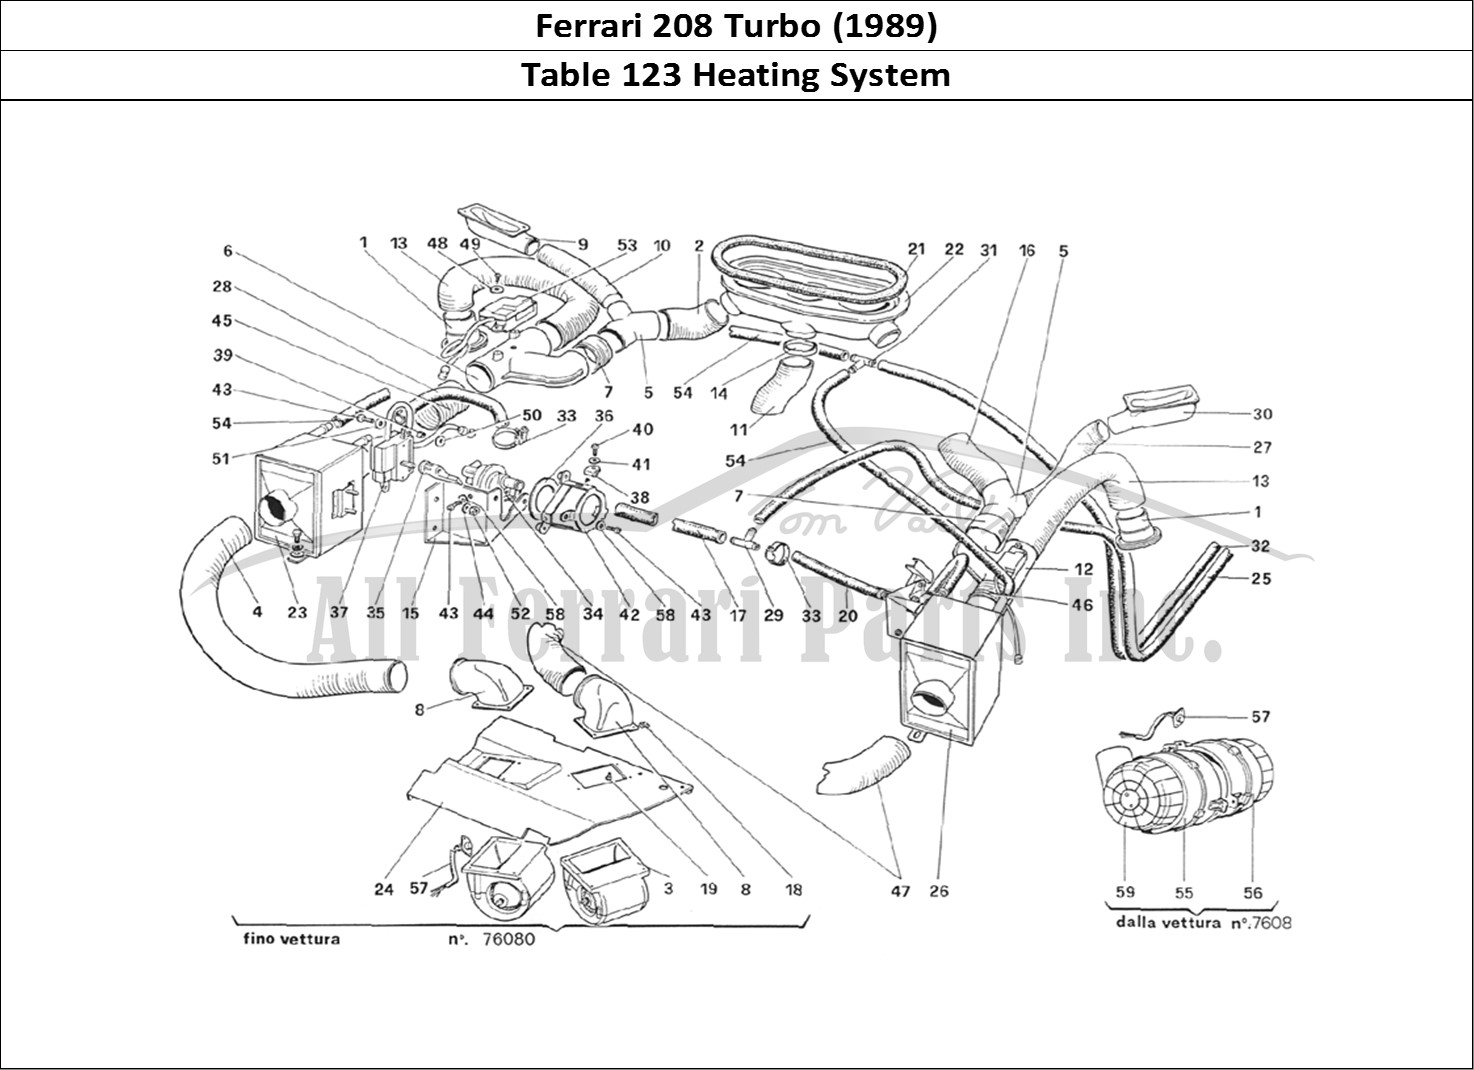 Ferrari Parts Ferrari 208 Turbo (1989) Page 123 Heating System